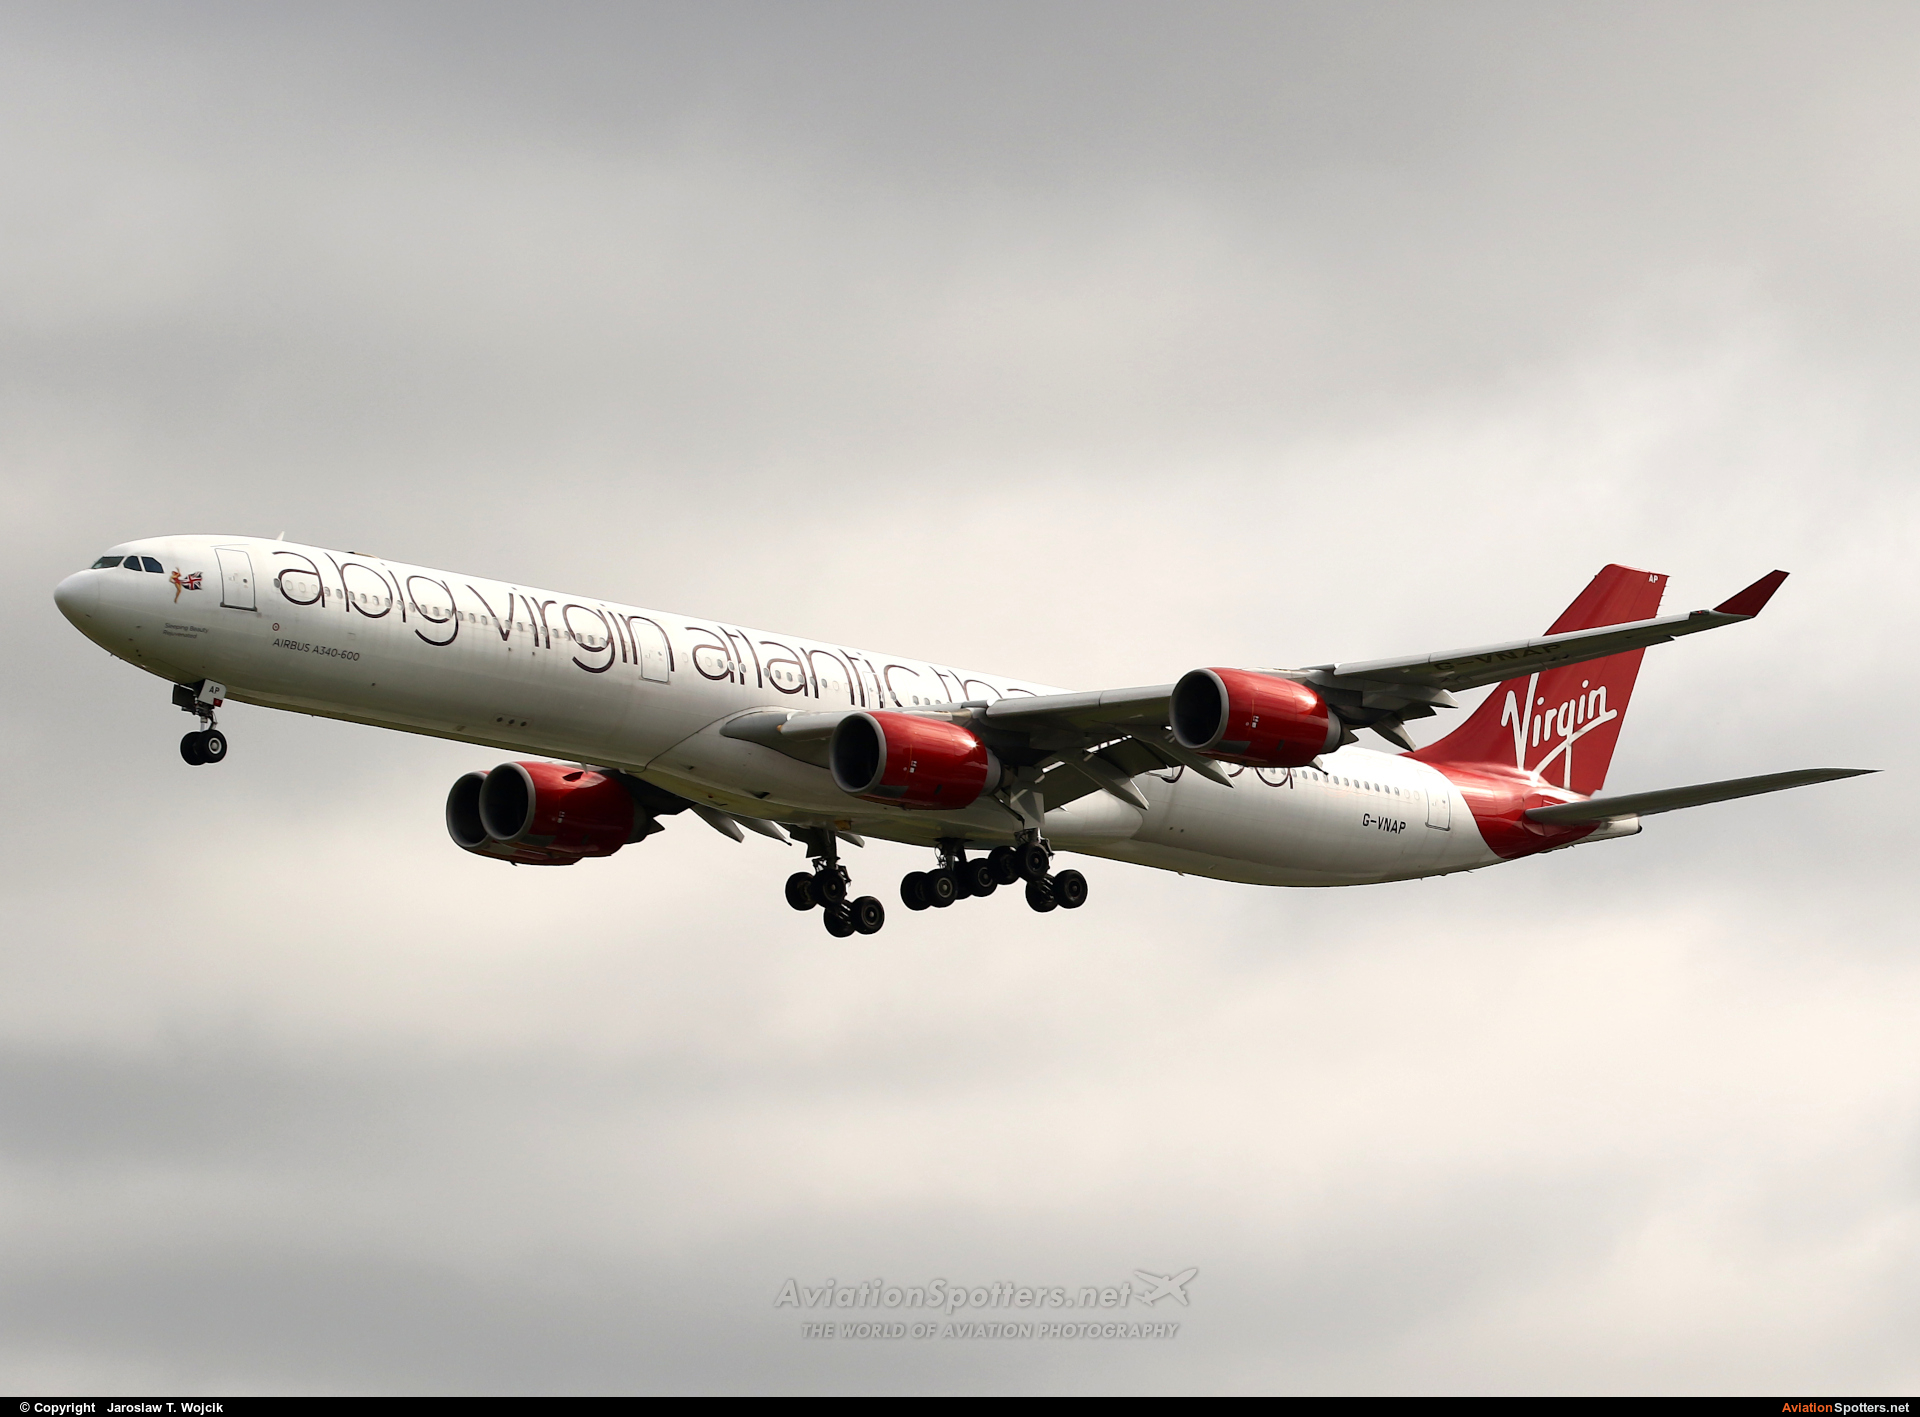 Virgin Atlantic  -  A340-600  (G-VNAP) By Jaroslaw T. Wojcik (jarektw)